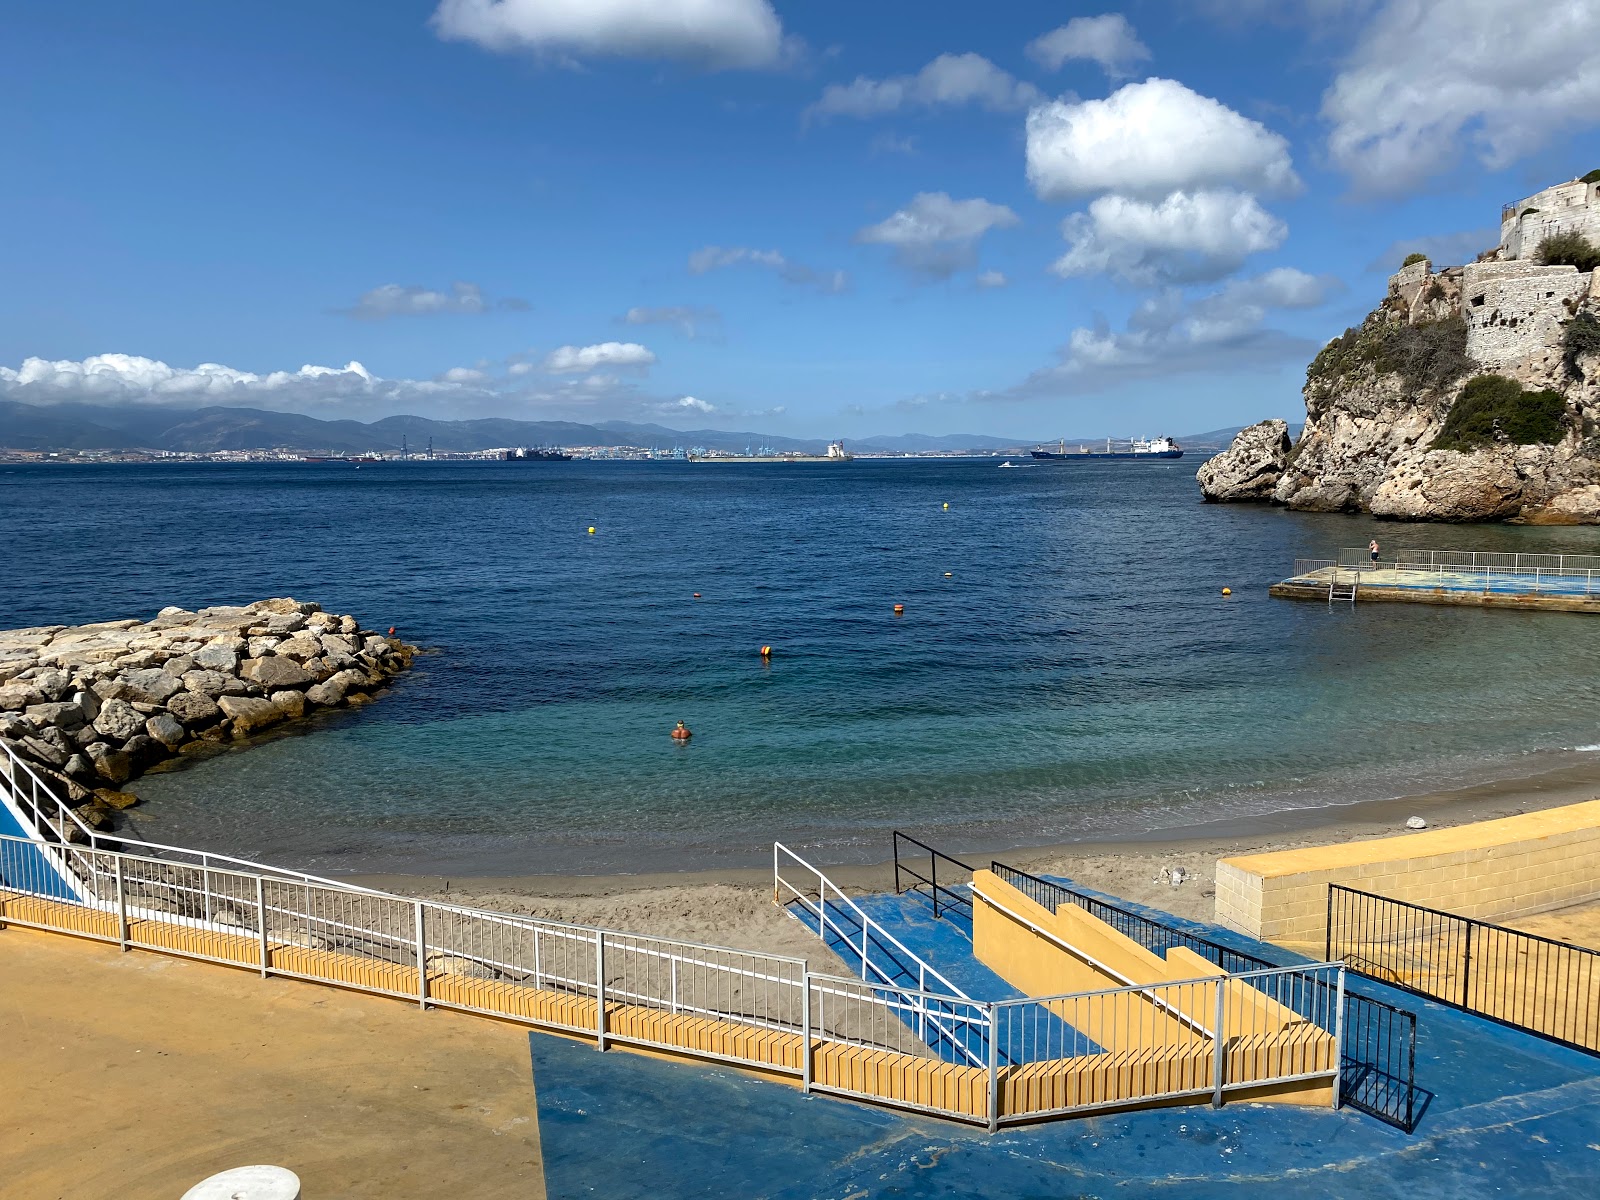 Fotografija Camp Bay Beach, Gibraltar z sivi kamenček površino